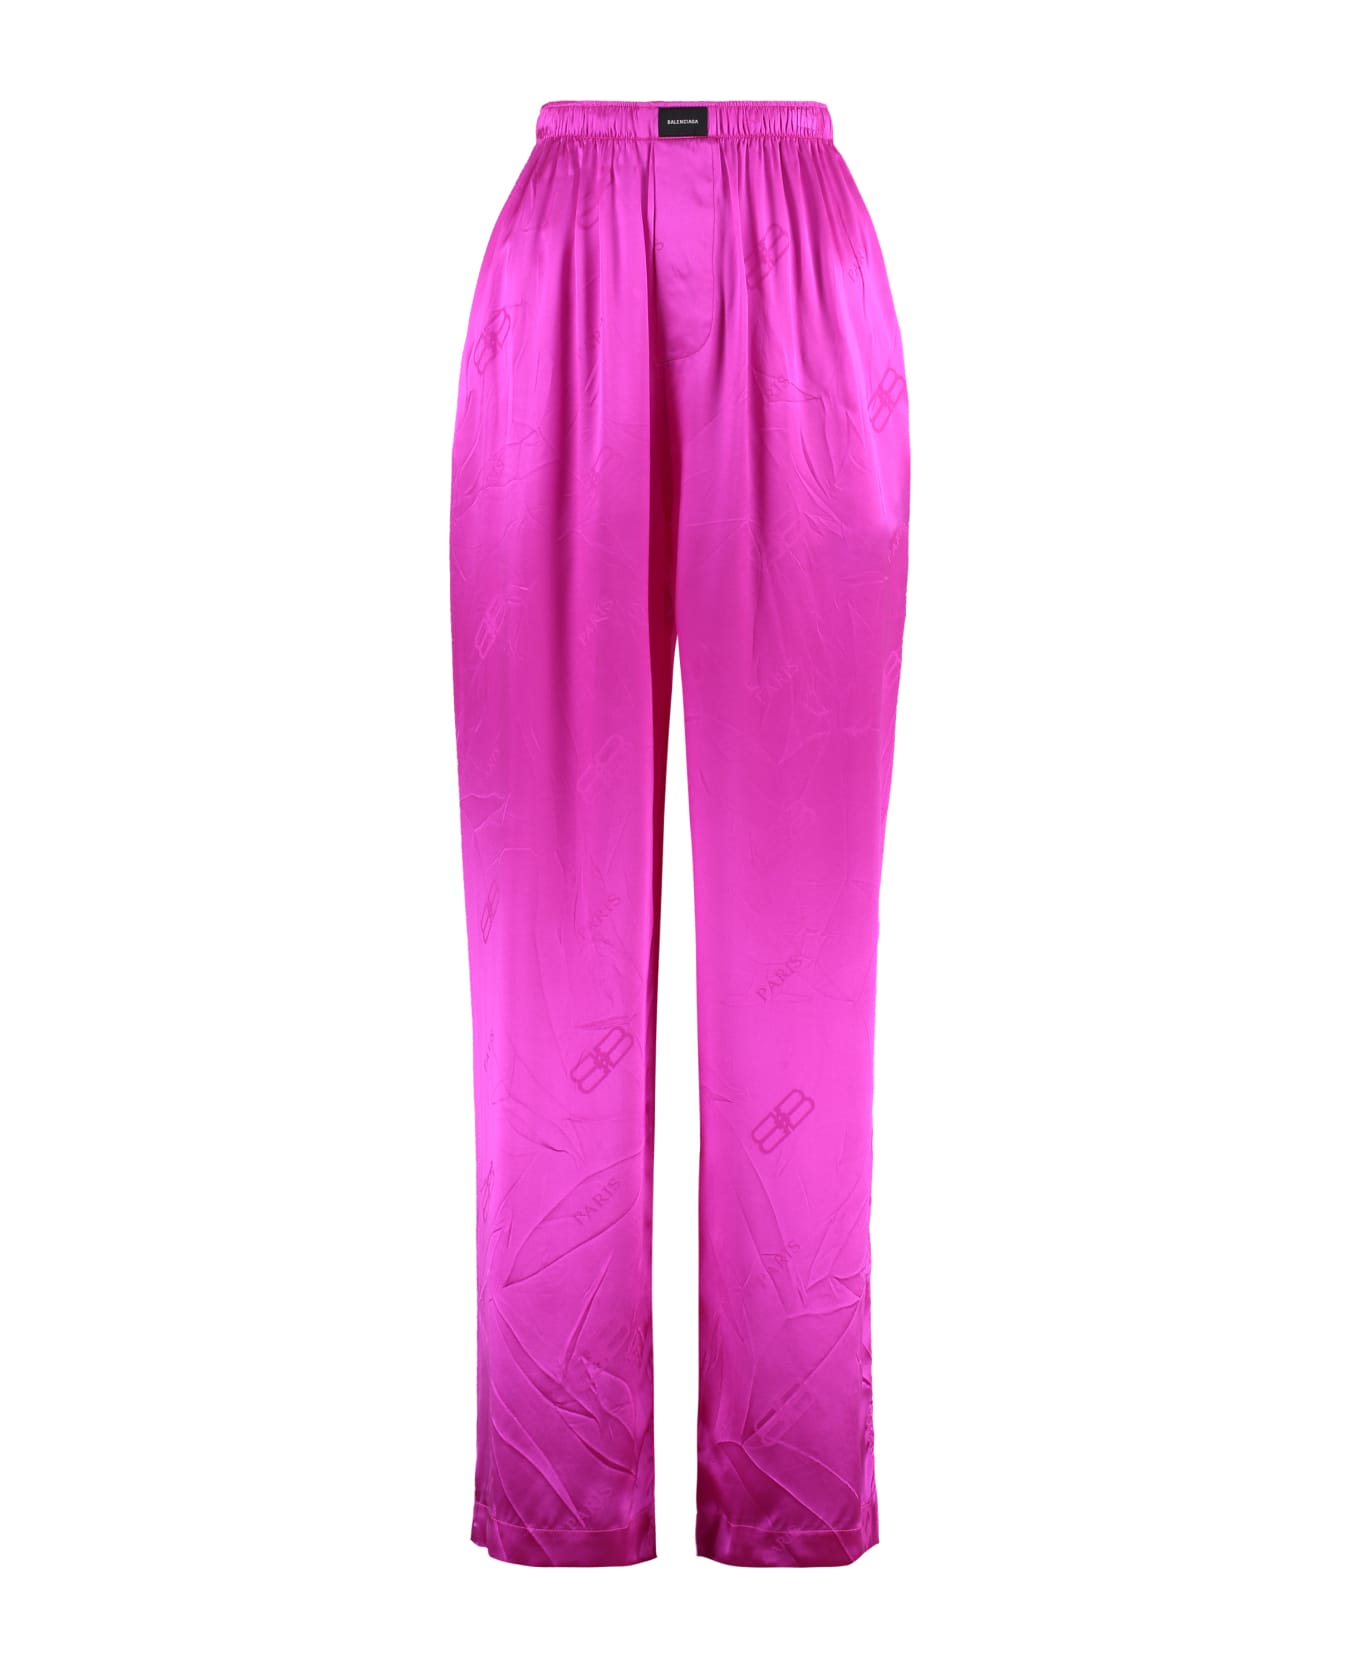 Balenciaga Silk Pajama Pants - Fuchsia